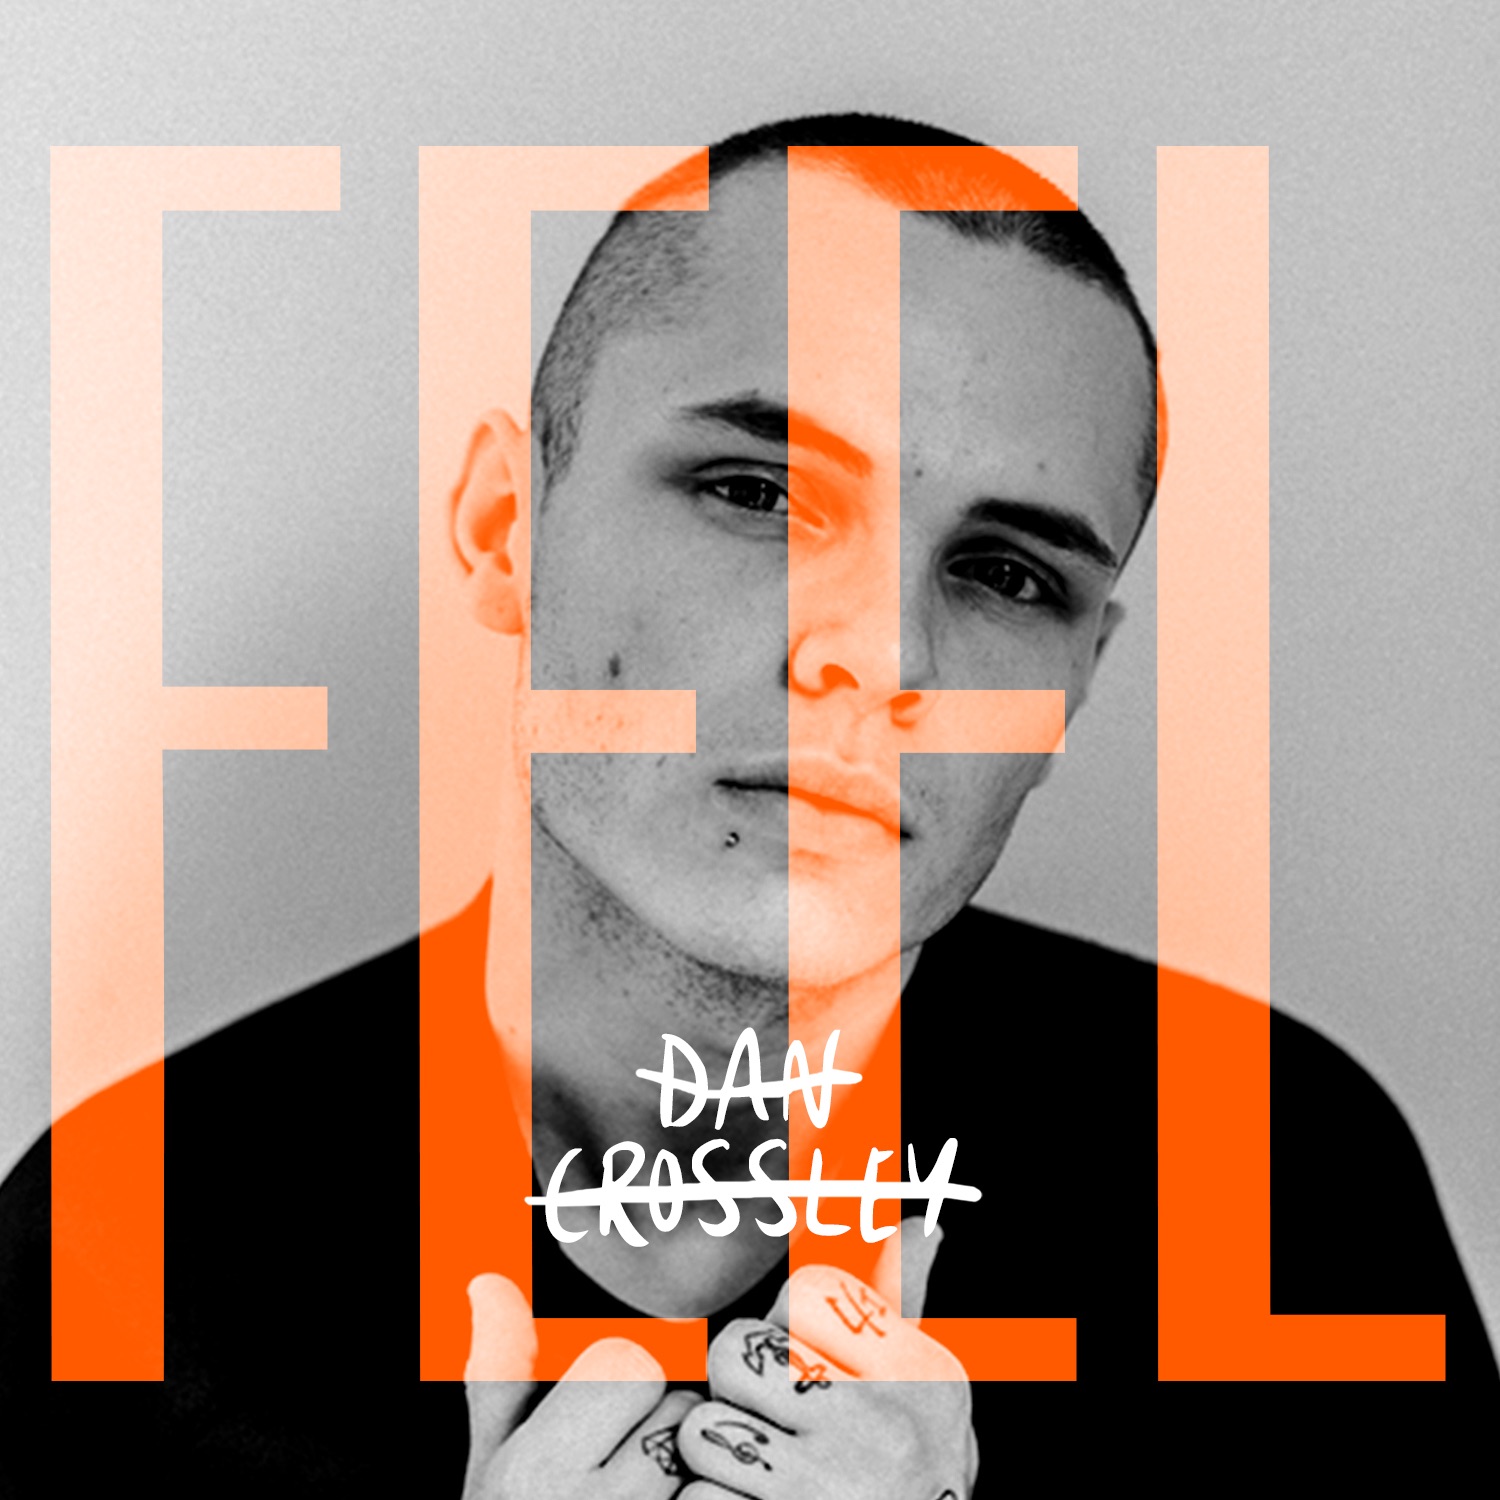 Feel EP - Dan Crossley